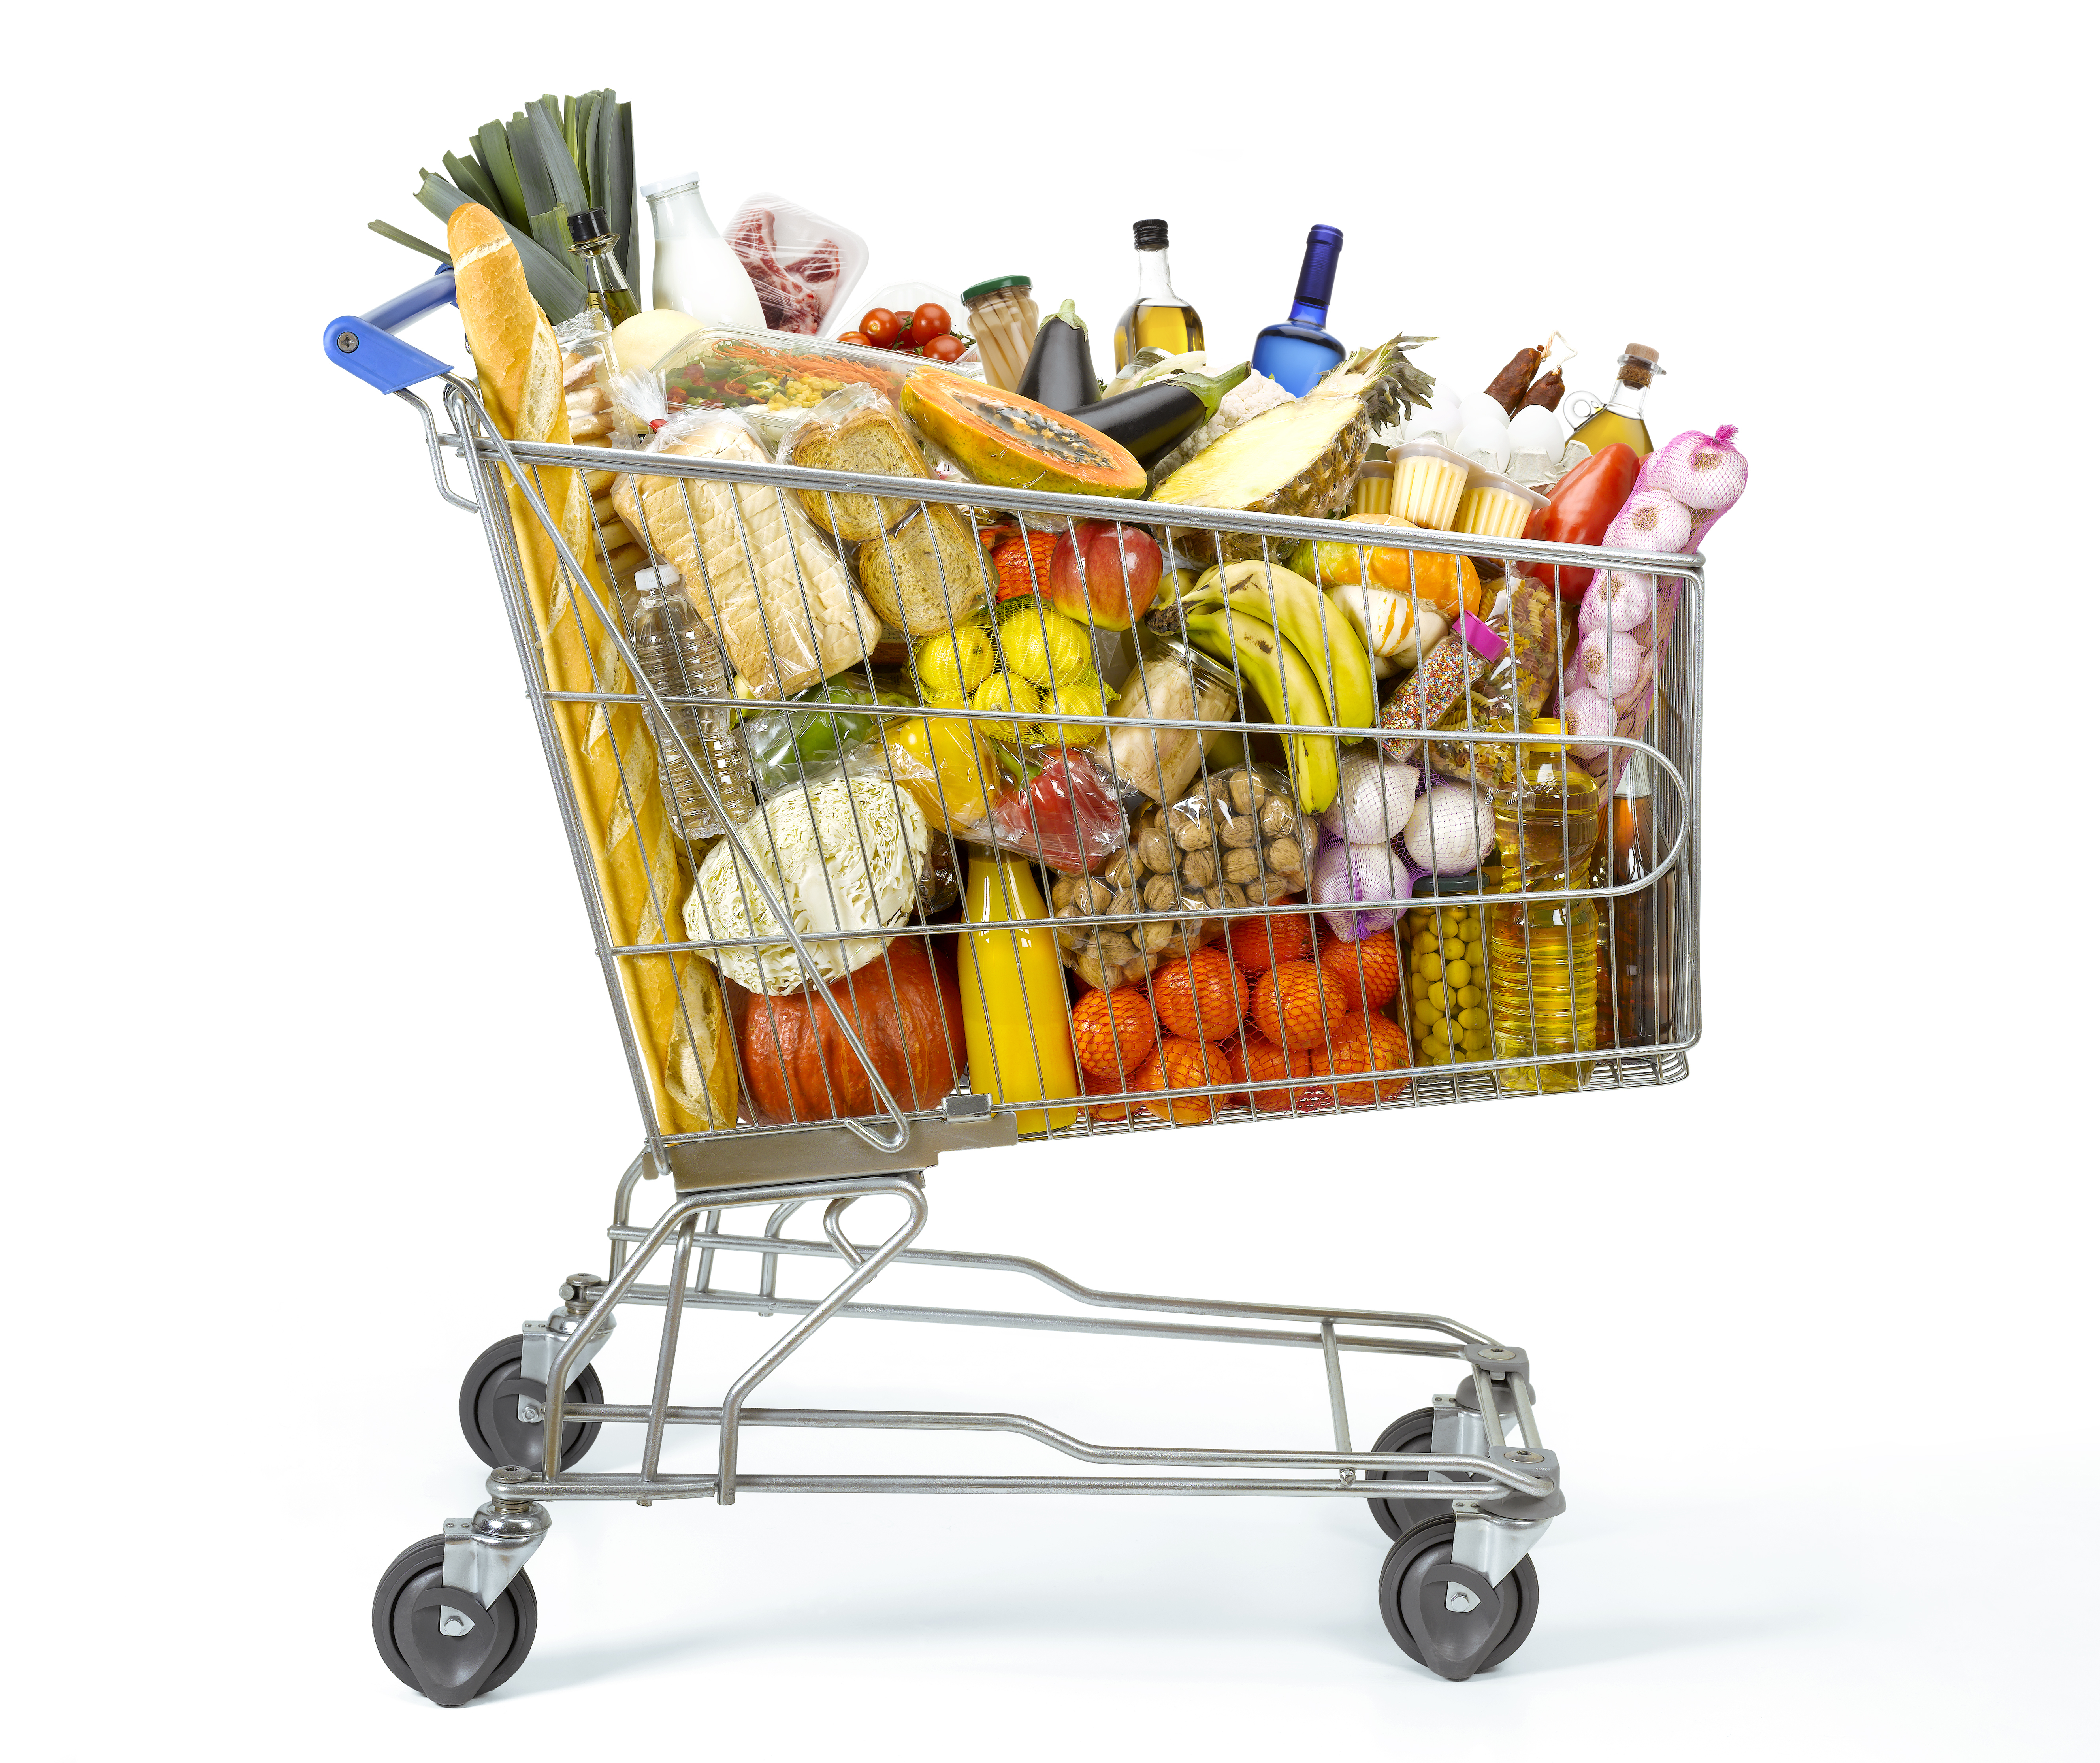 A shopping cart full of food | Source: Shutterstock